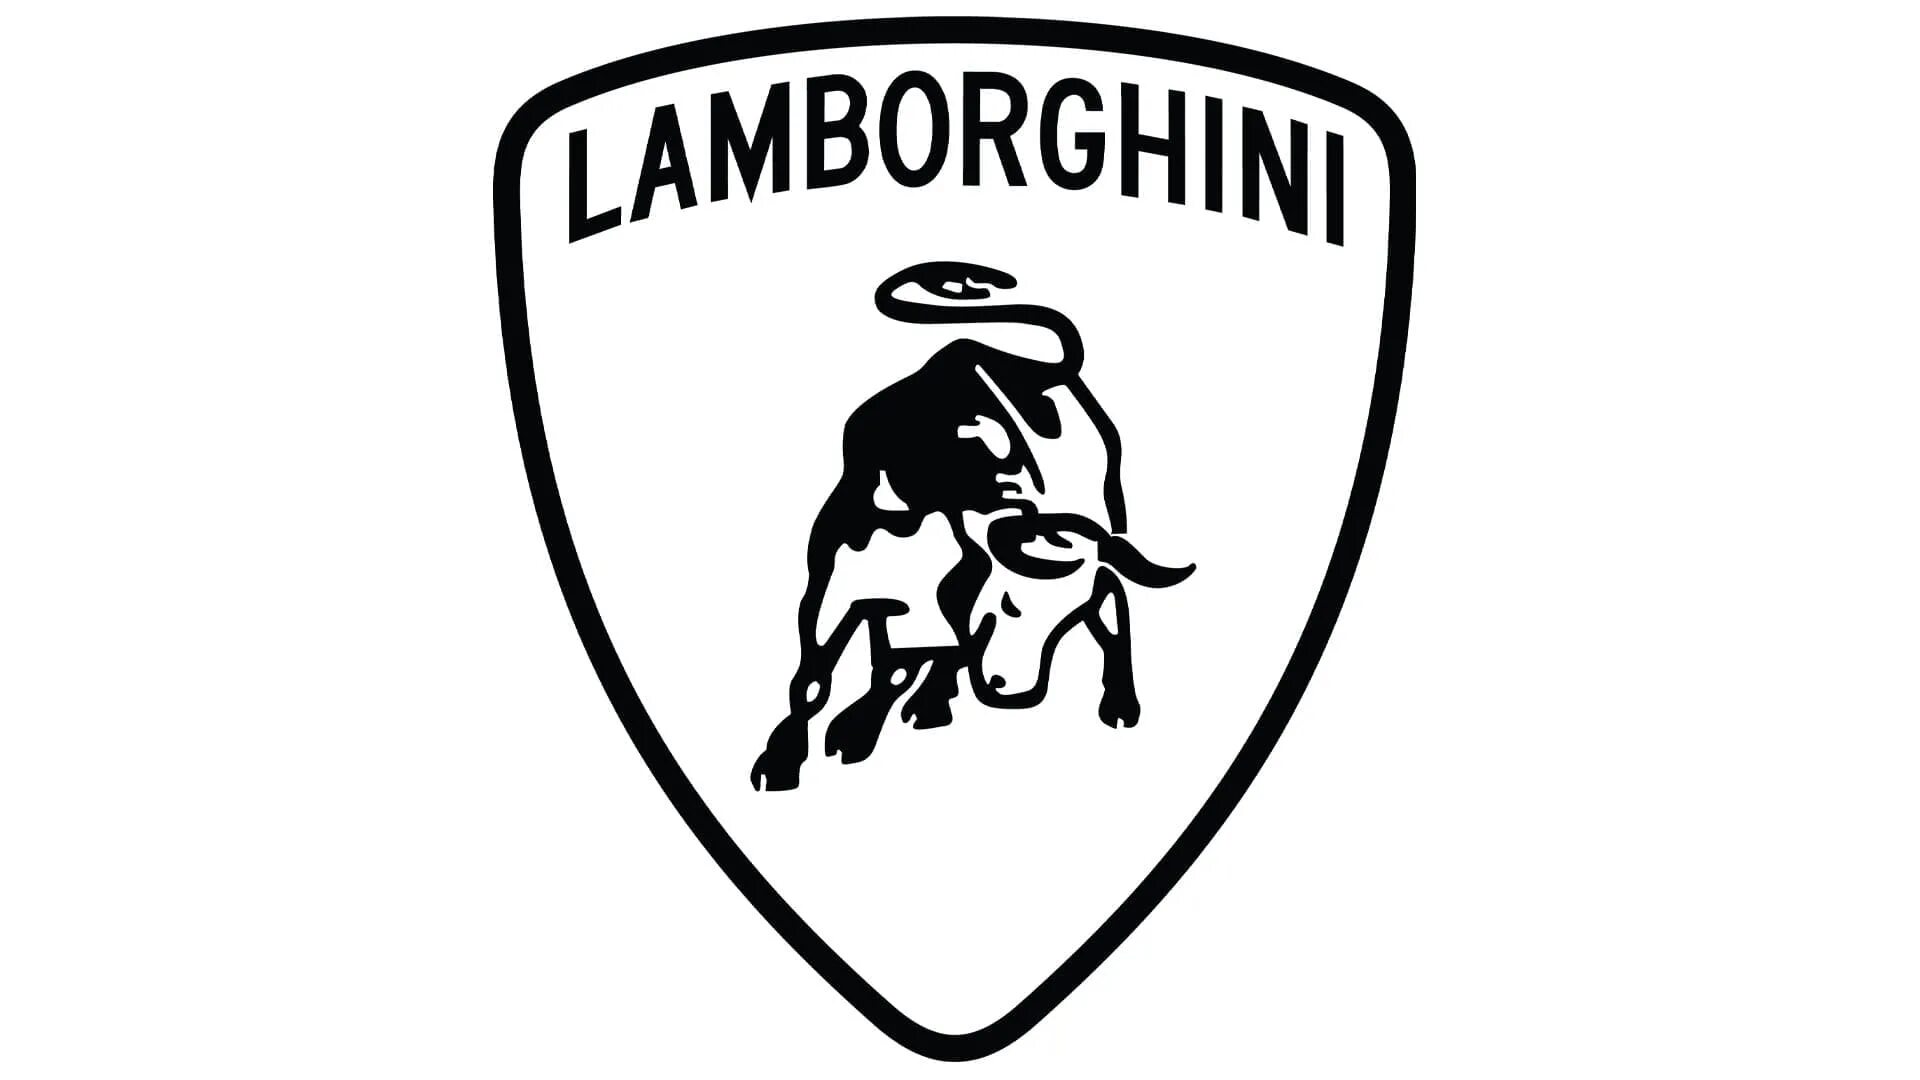 Ламба значок. Ламборджини лого. Знак Ламборджини. Логотип Ламборгини на белом фоне. Значок Ламборгини раскраска.